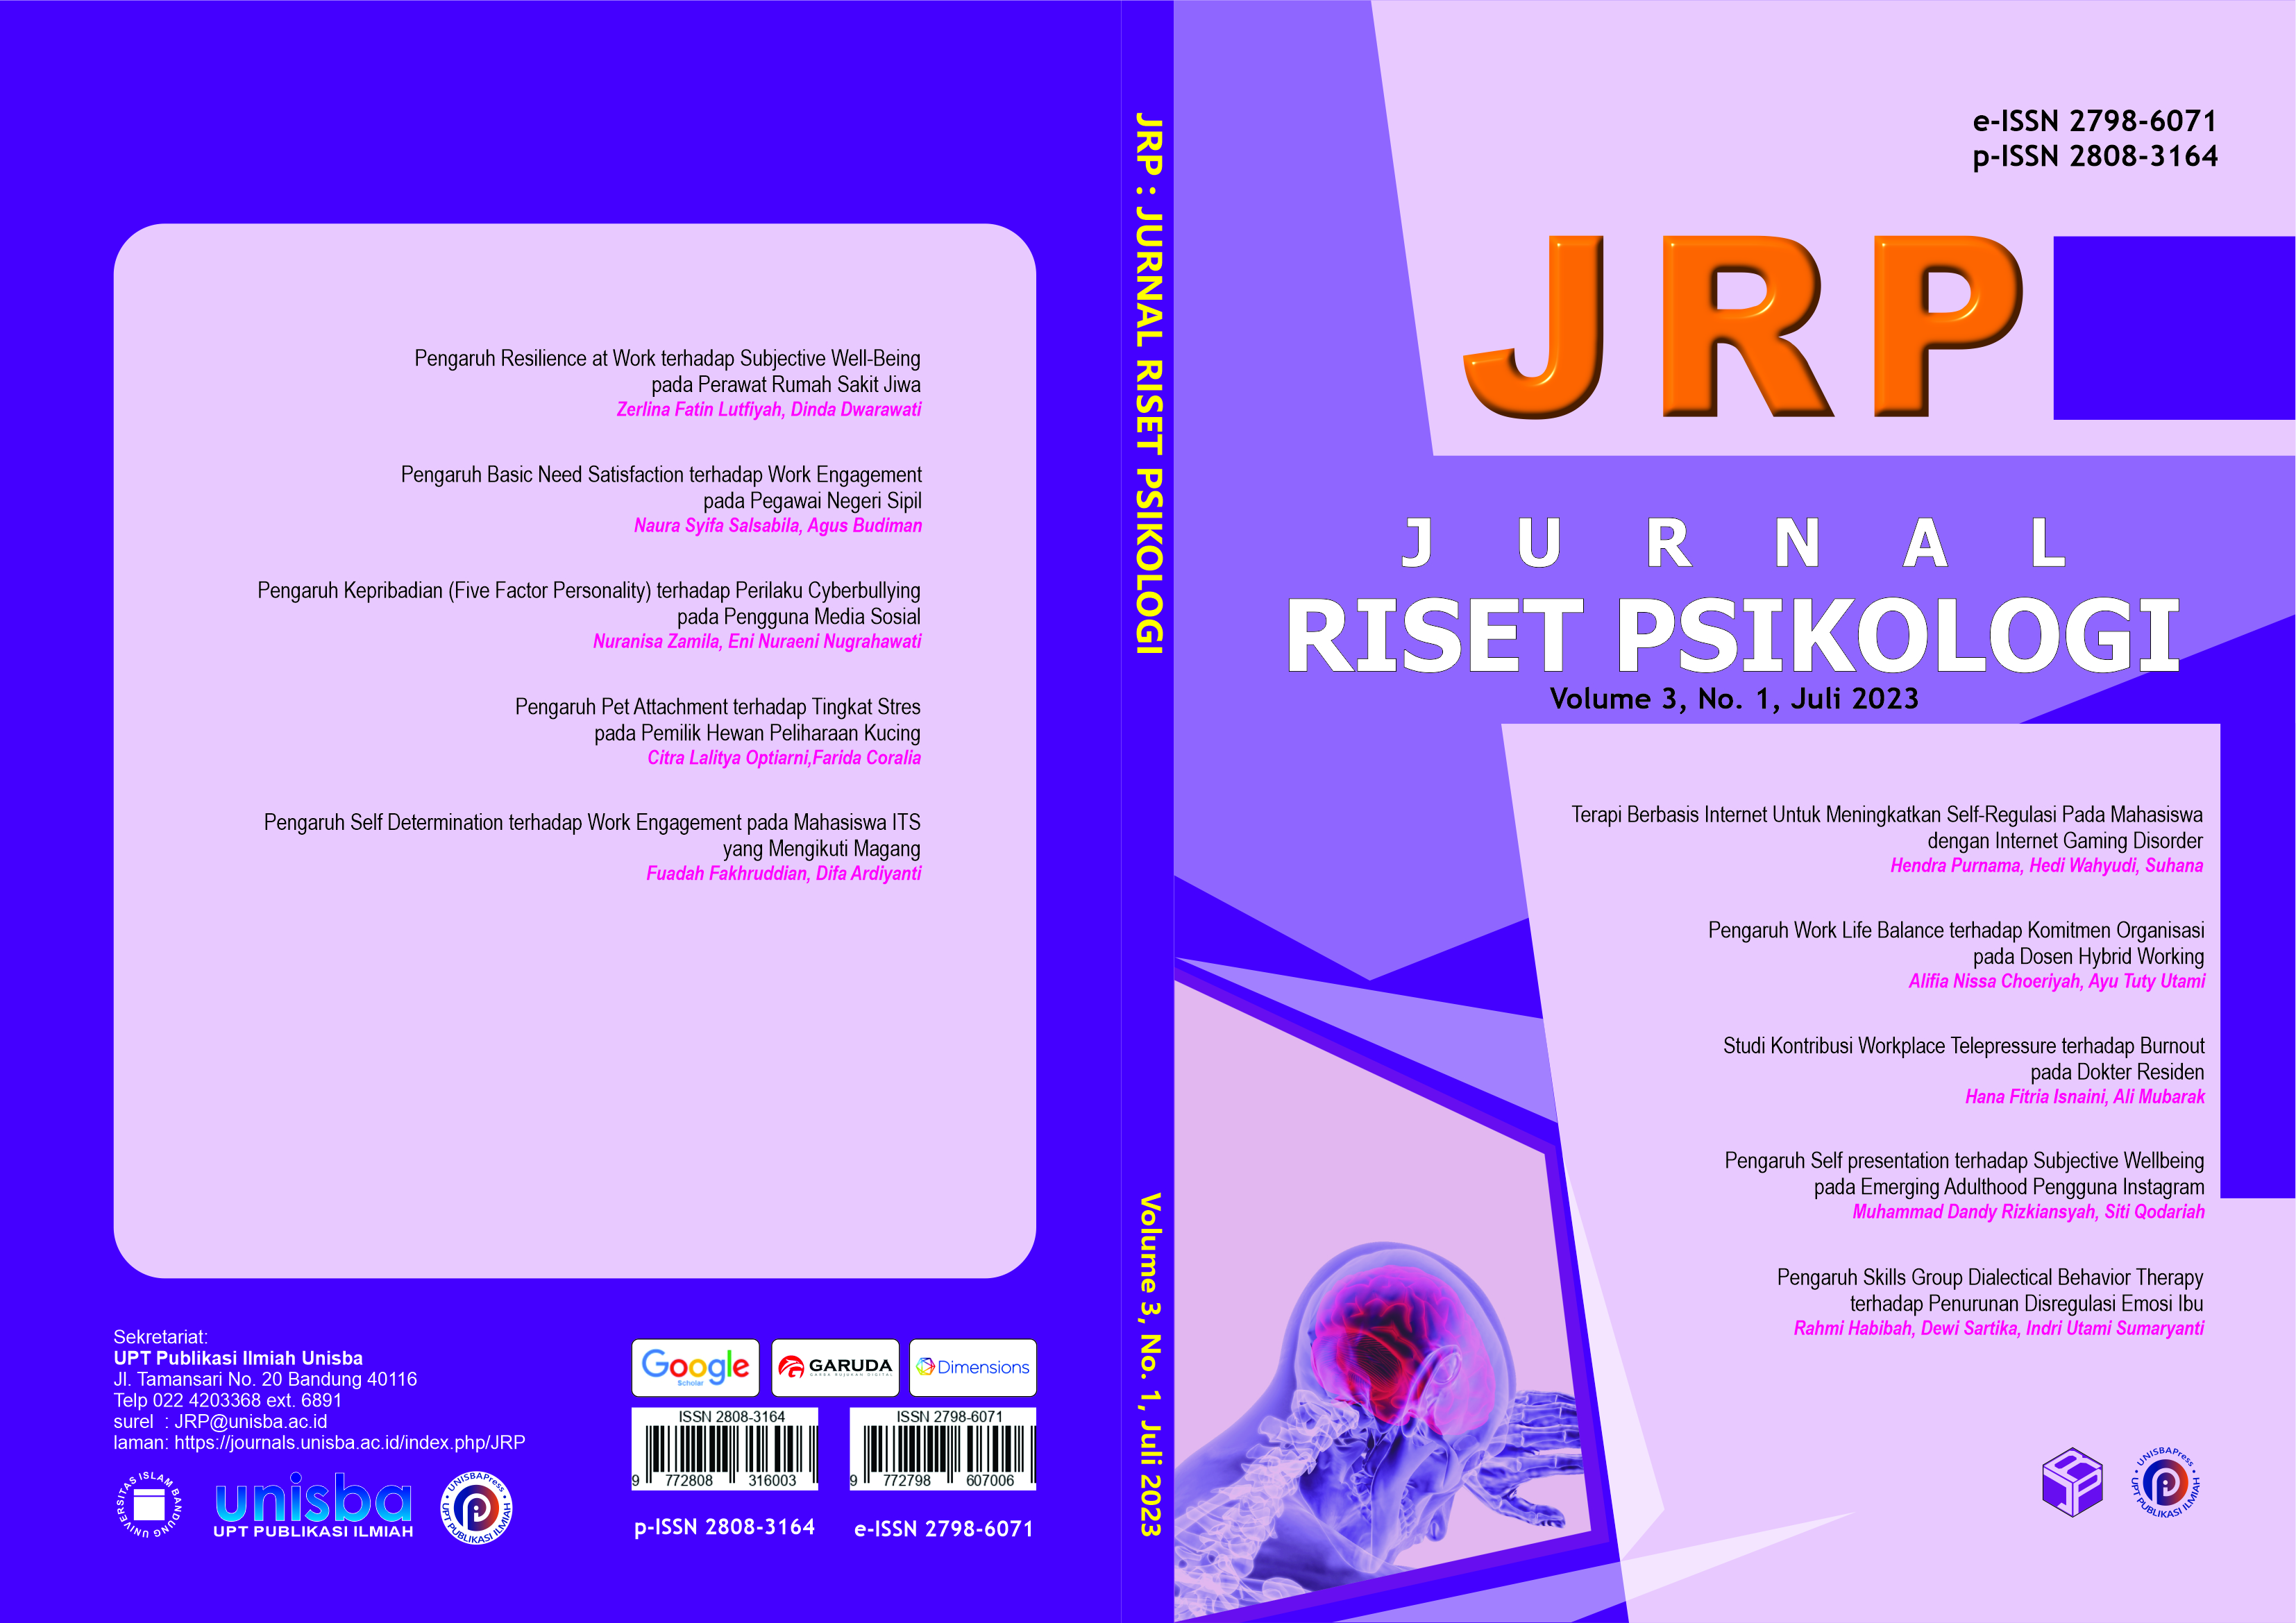 					View Volume 3, No. 1, Juli 2023, Jurnal Riset Psikologi (JRP)
				